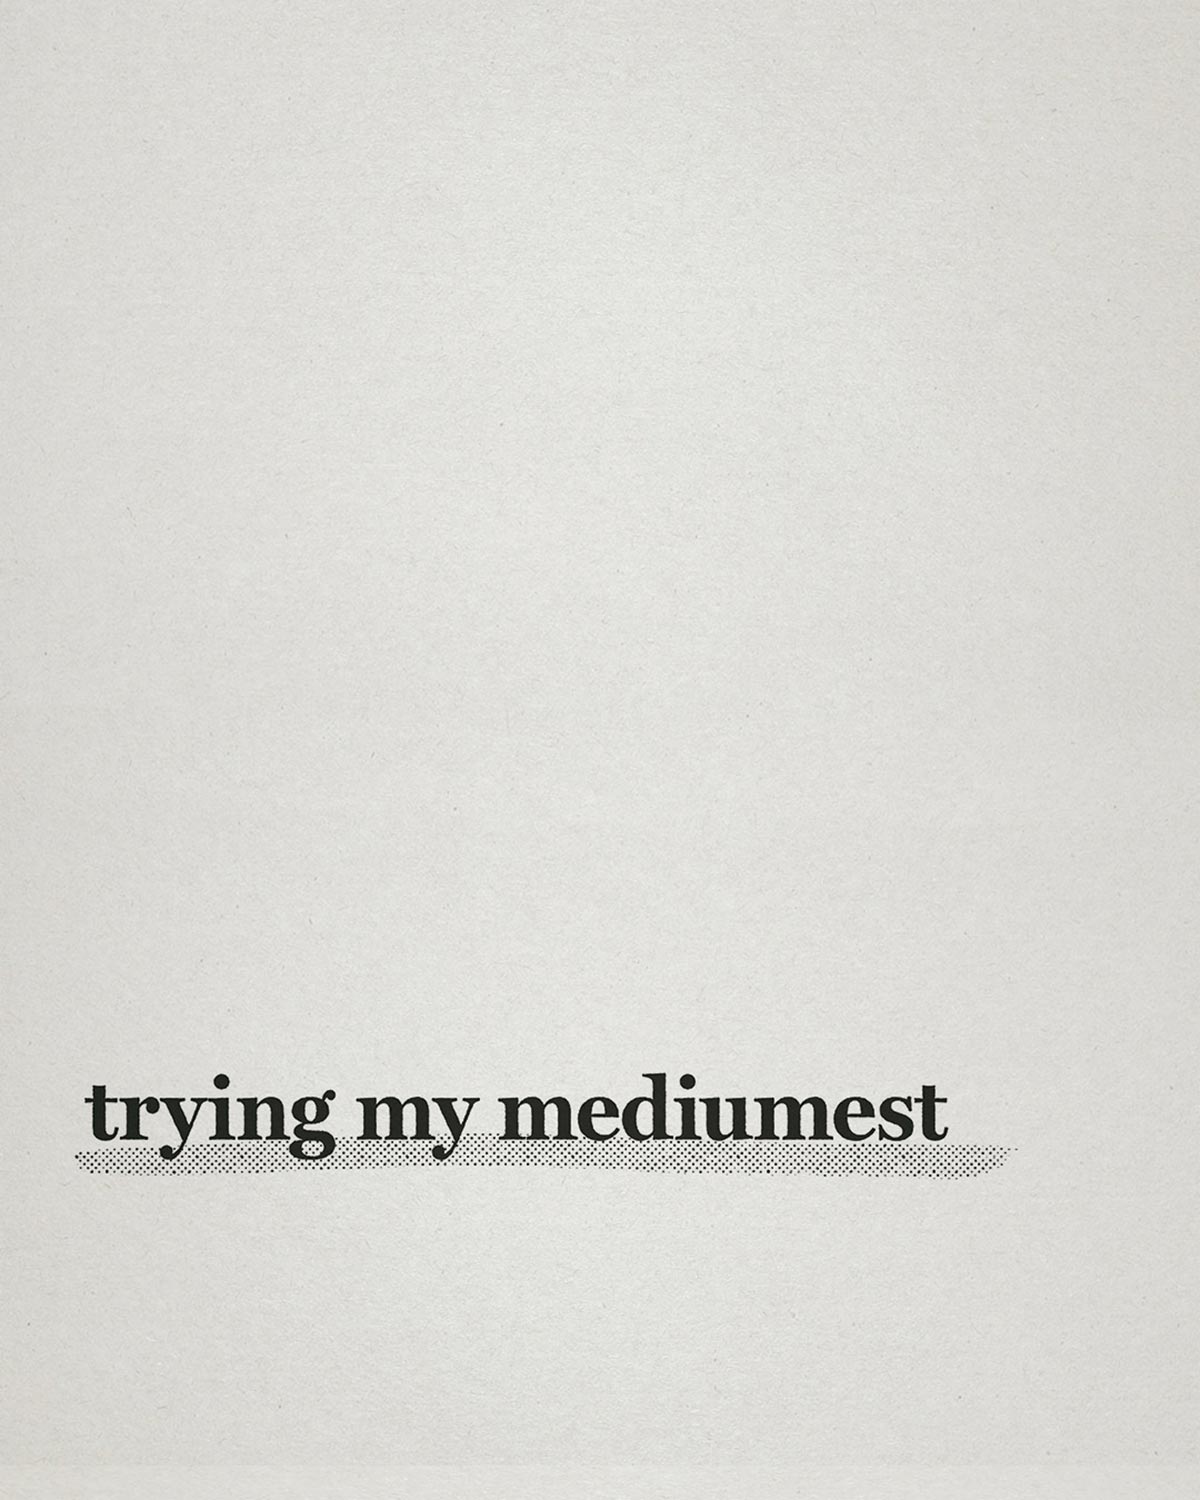 mediumest